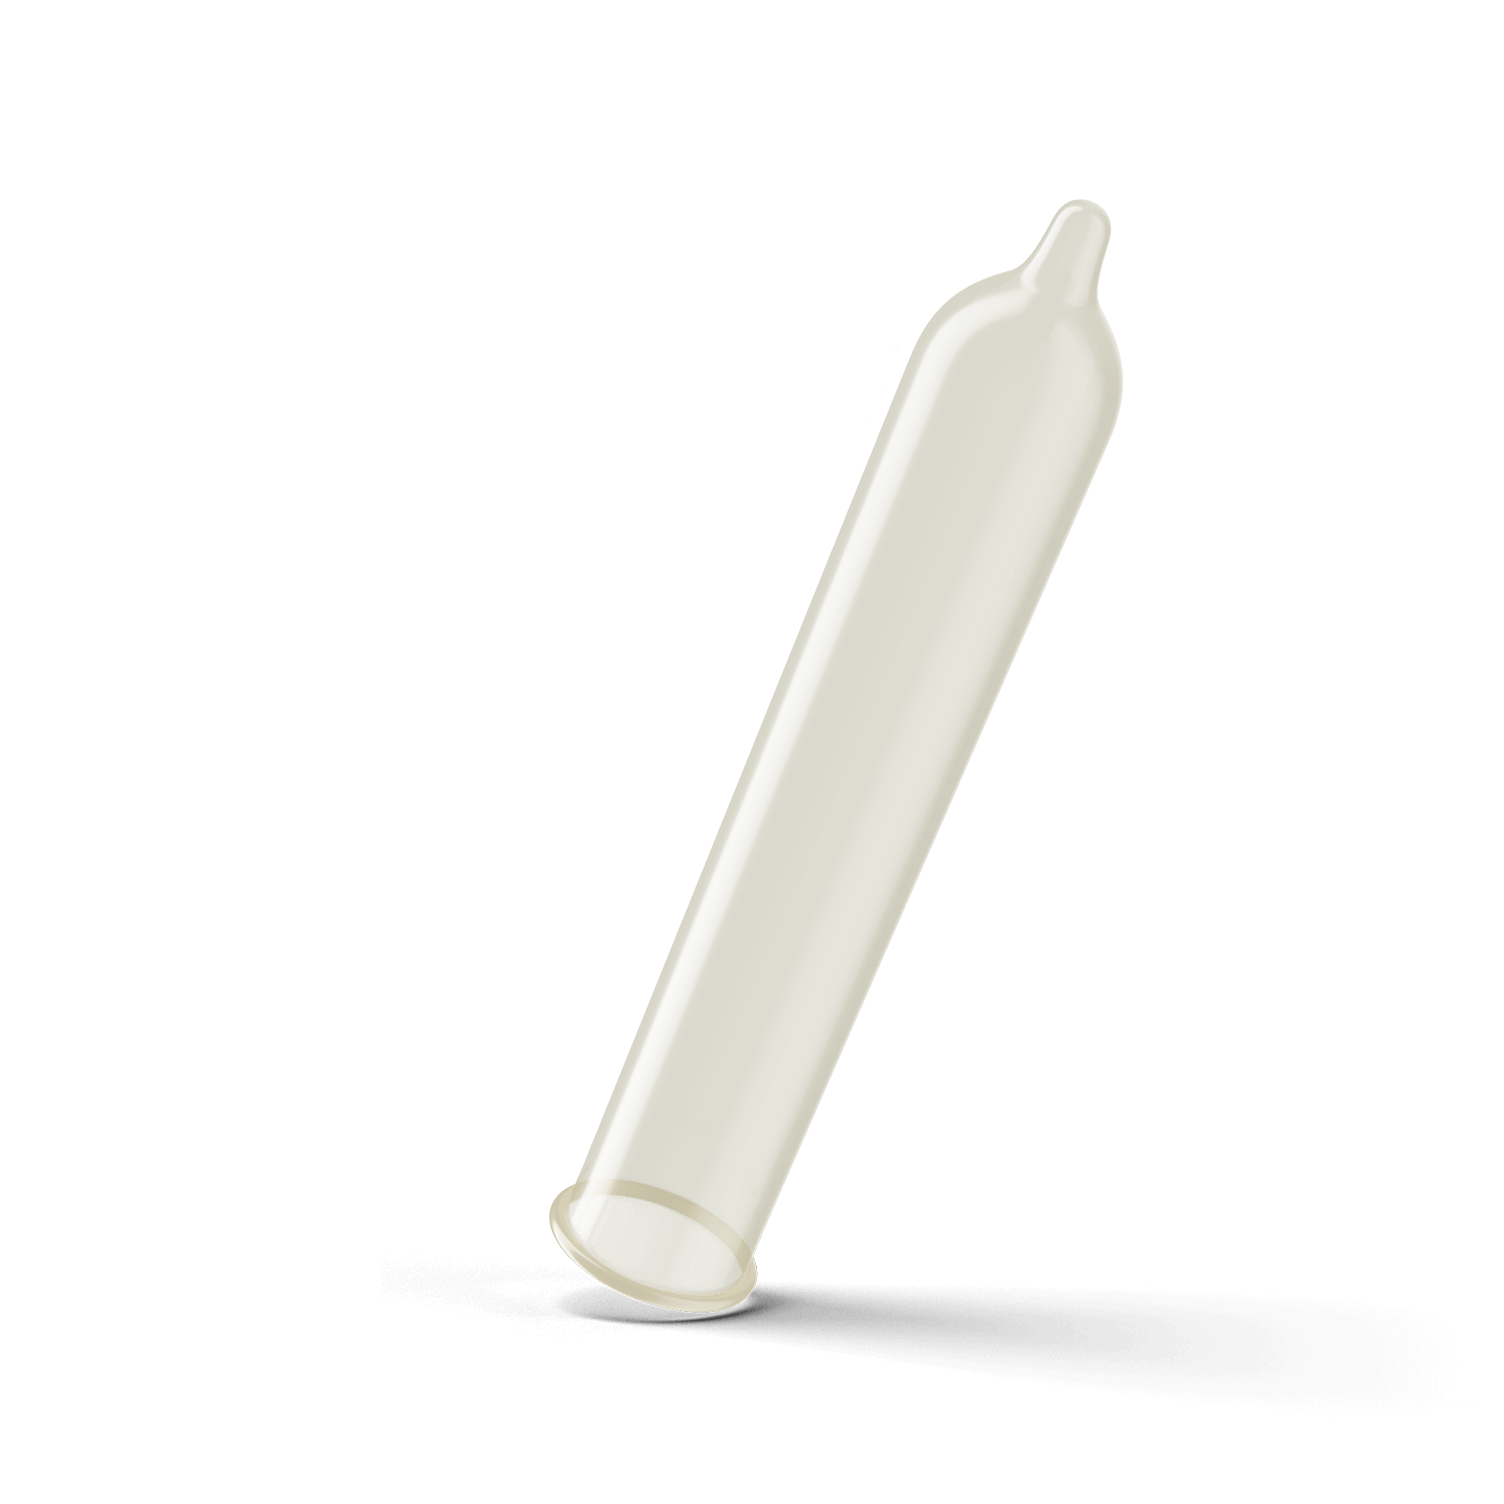 Trojan Ultra Thin Spermicidal thin straight shaped condom with reservoir tip.